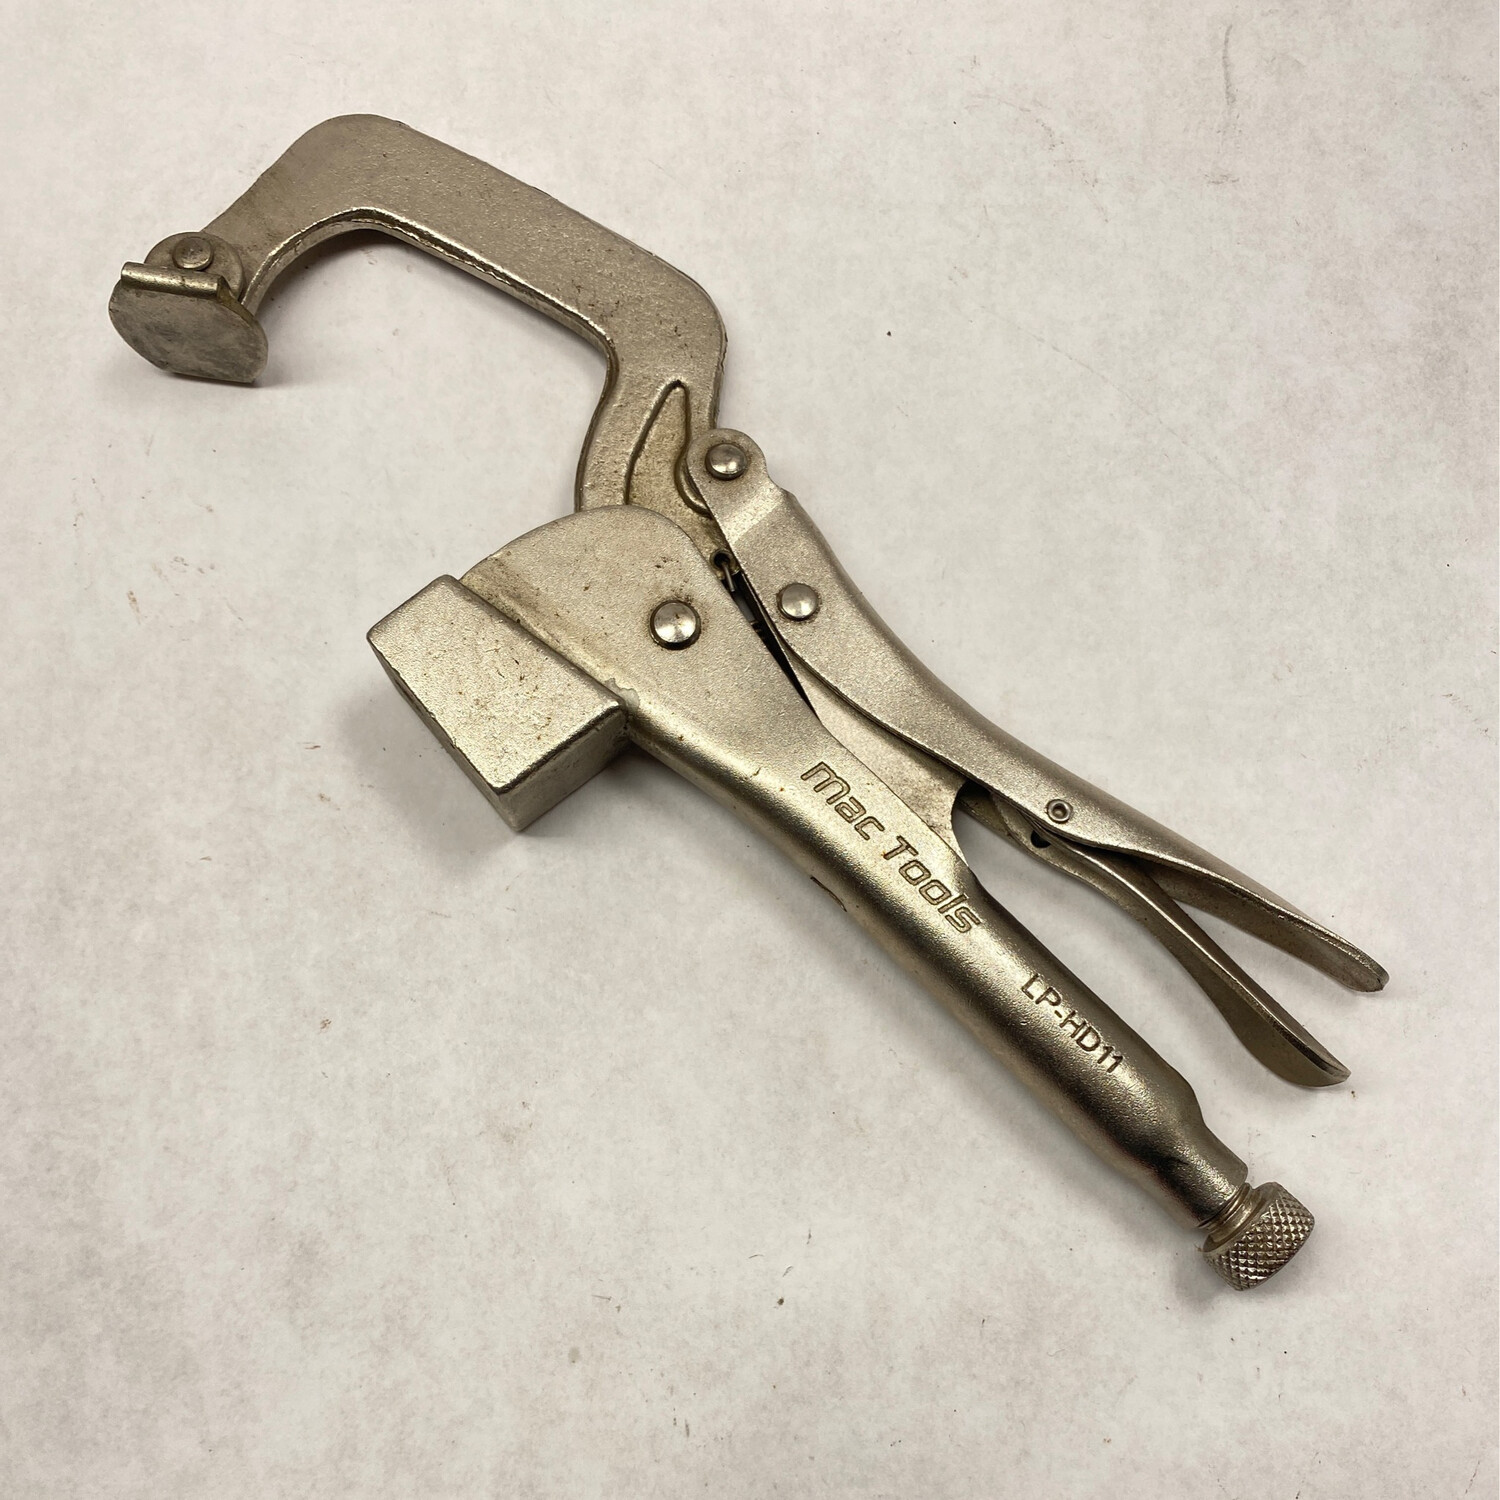 Mac Tools 11” Locking Clamp Vise Pliers